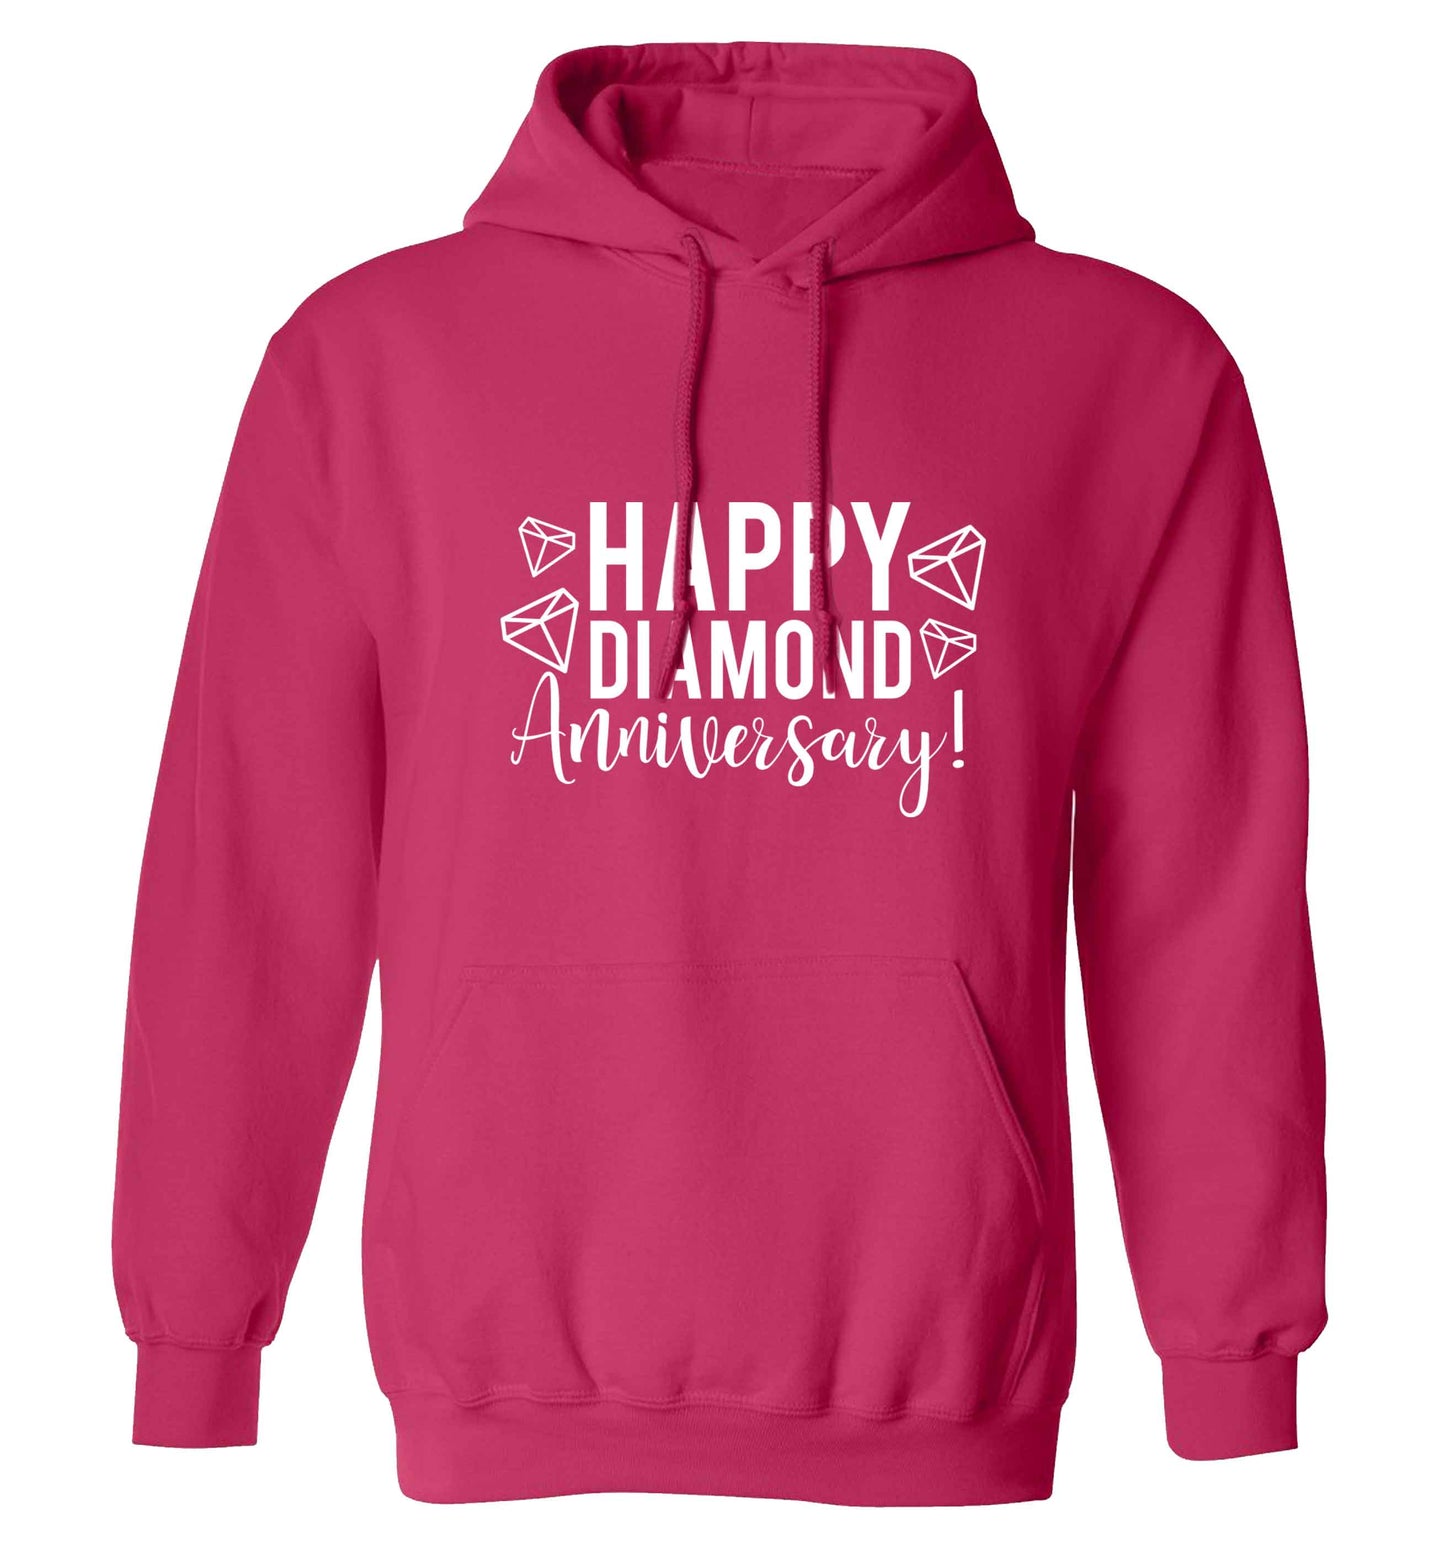 Happy diamond anniversary! adults unisex pink hoodie 2XL